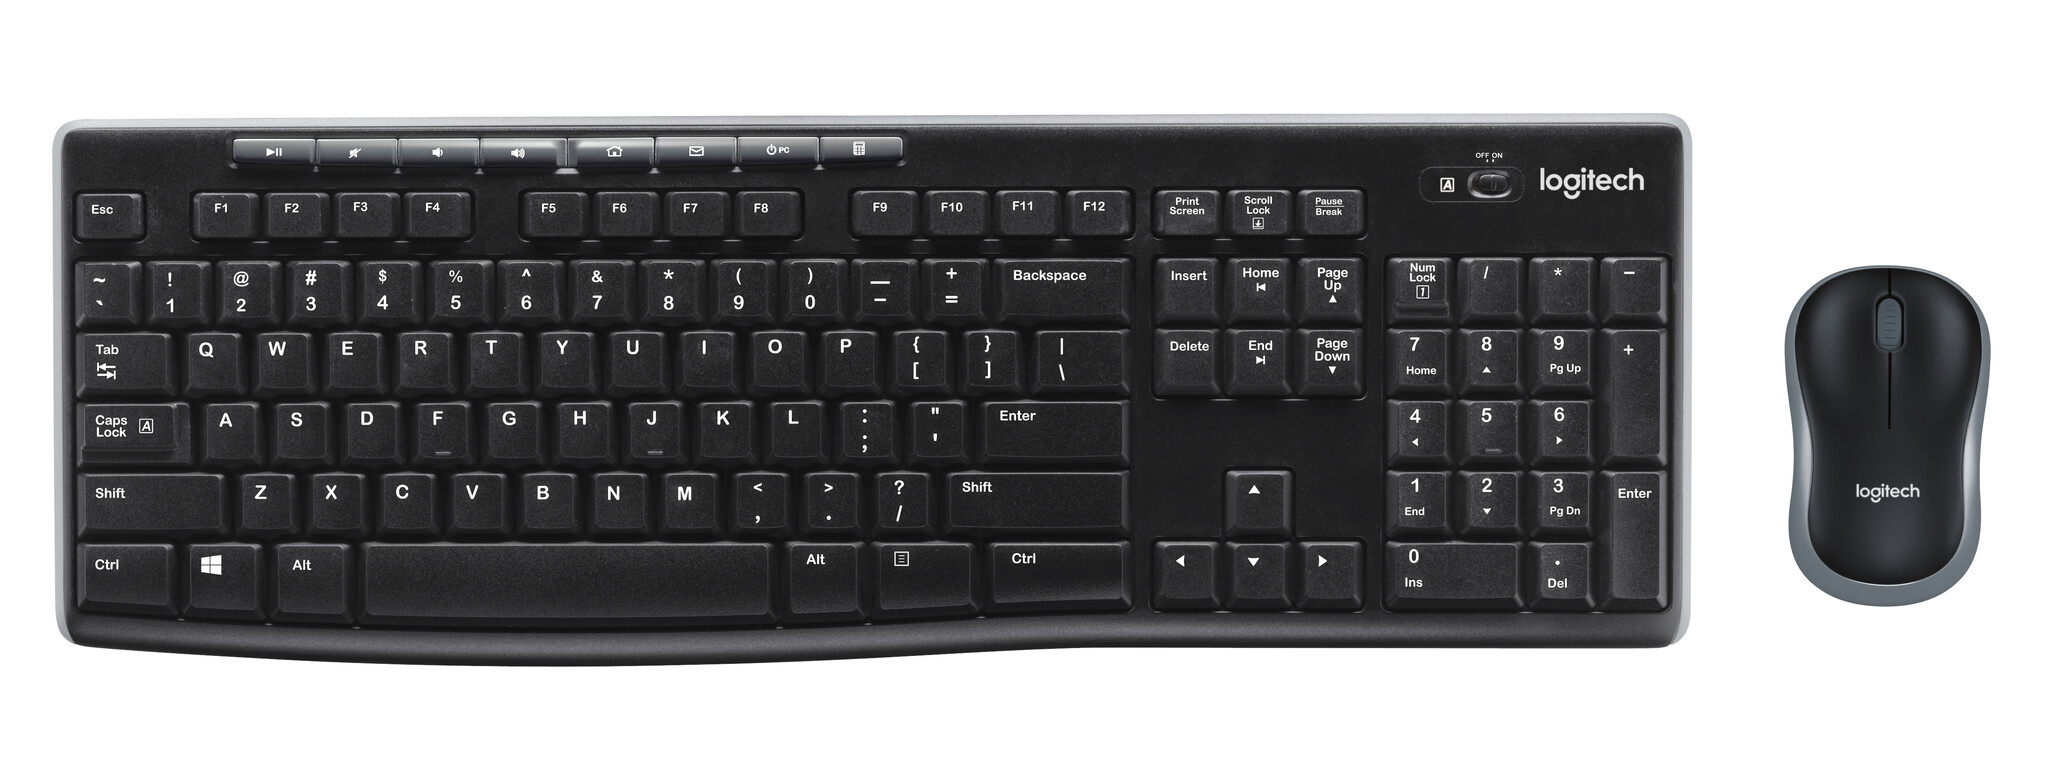 Logitech MK270 Wireless USB Keyboard with Optical Mouse – Black (920-004523) #361816